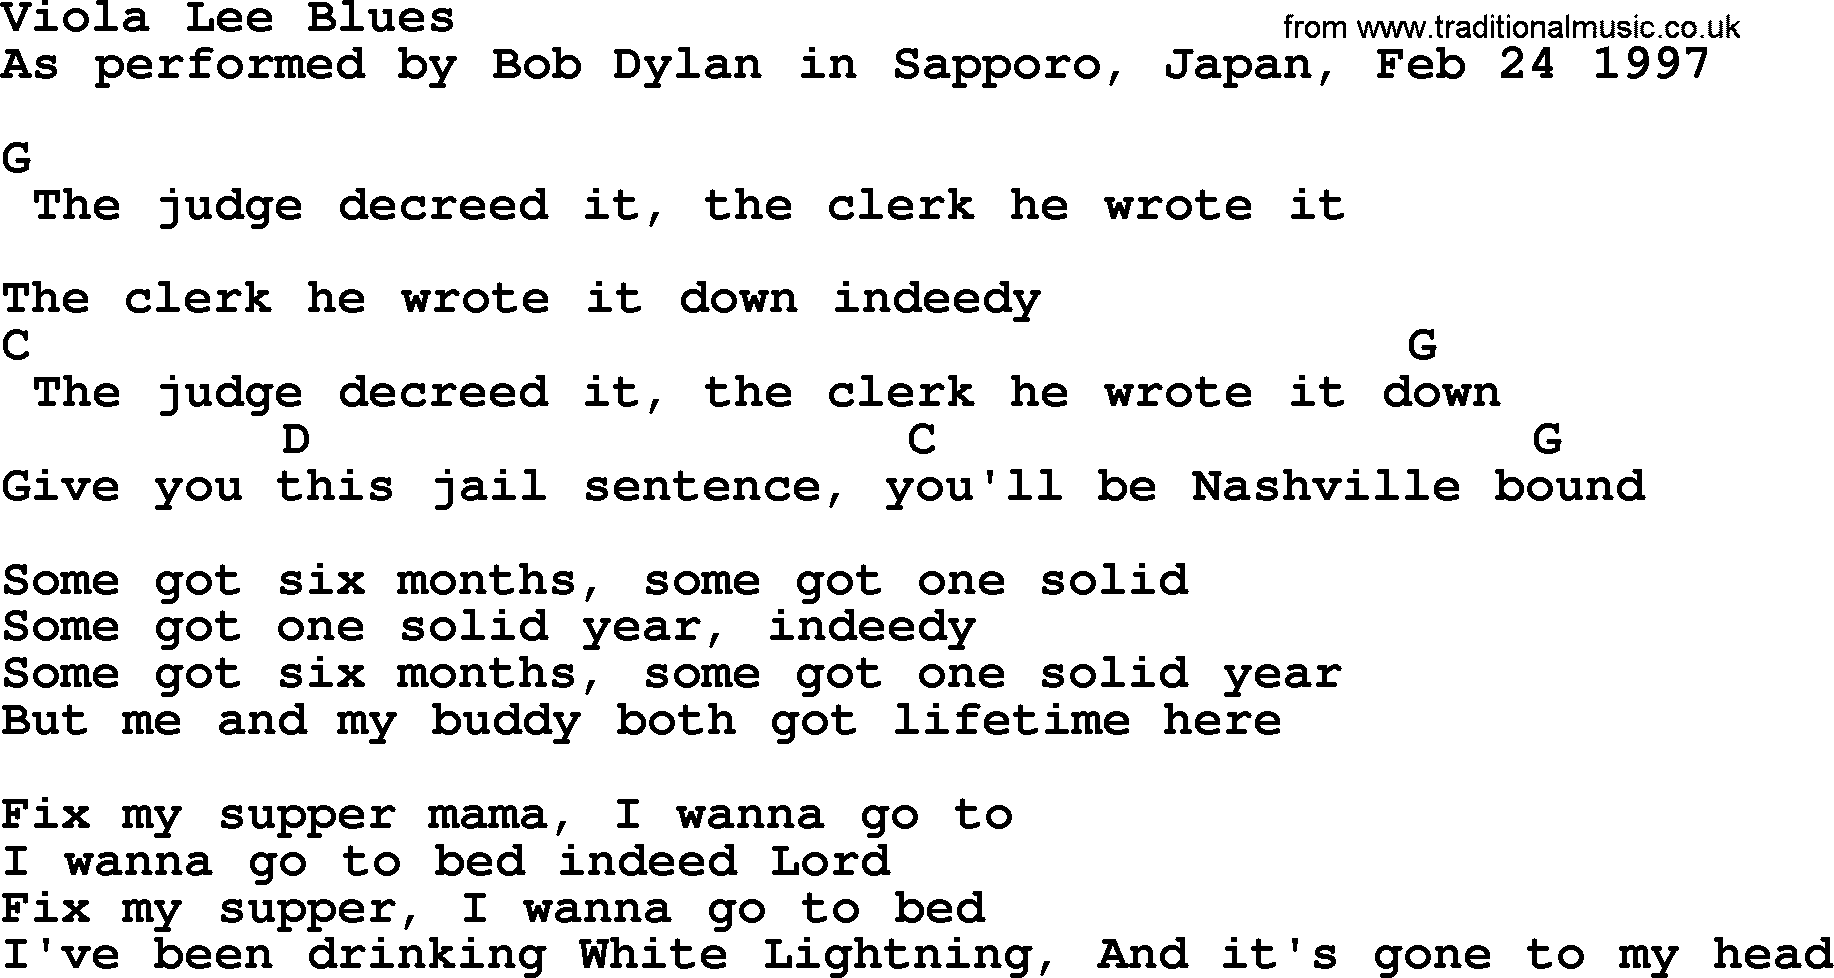 Bob Dylan song, lyrics with chords - Viola Lee Blues